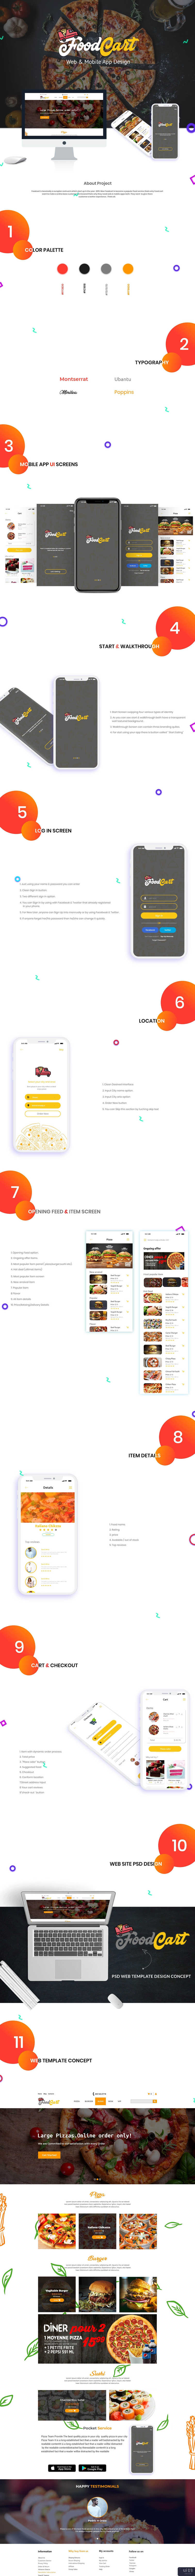 适用于 iPhone x 的餐车应用程序(Food-cart apps for iPhone x)插图